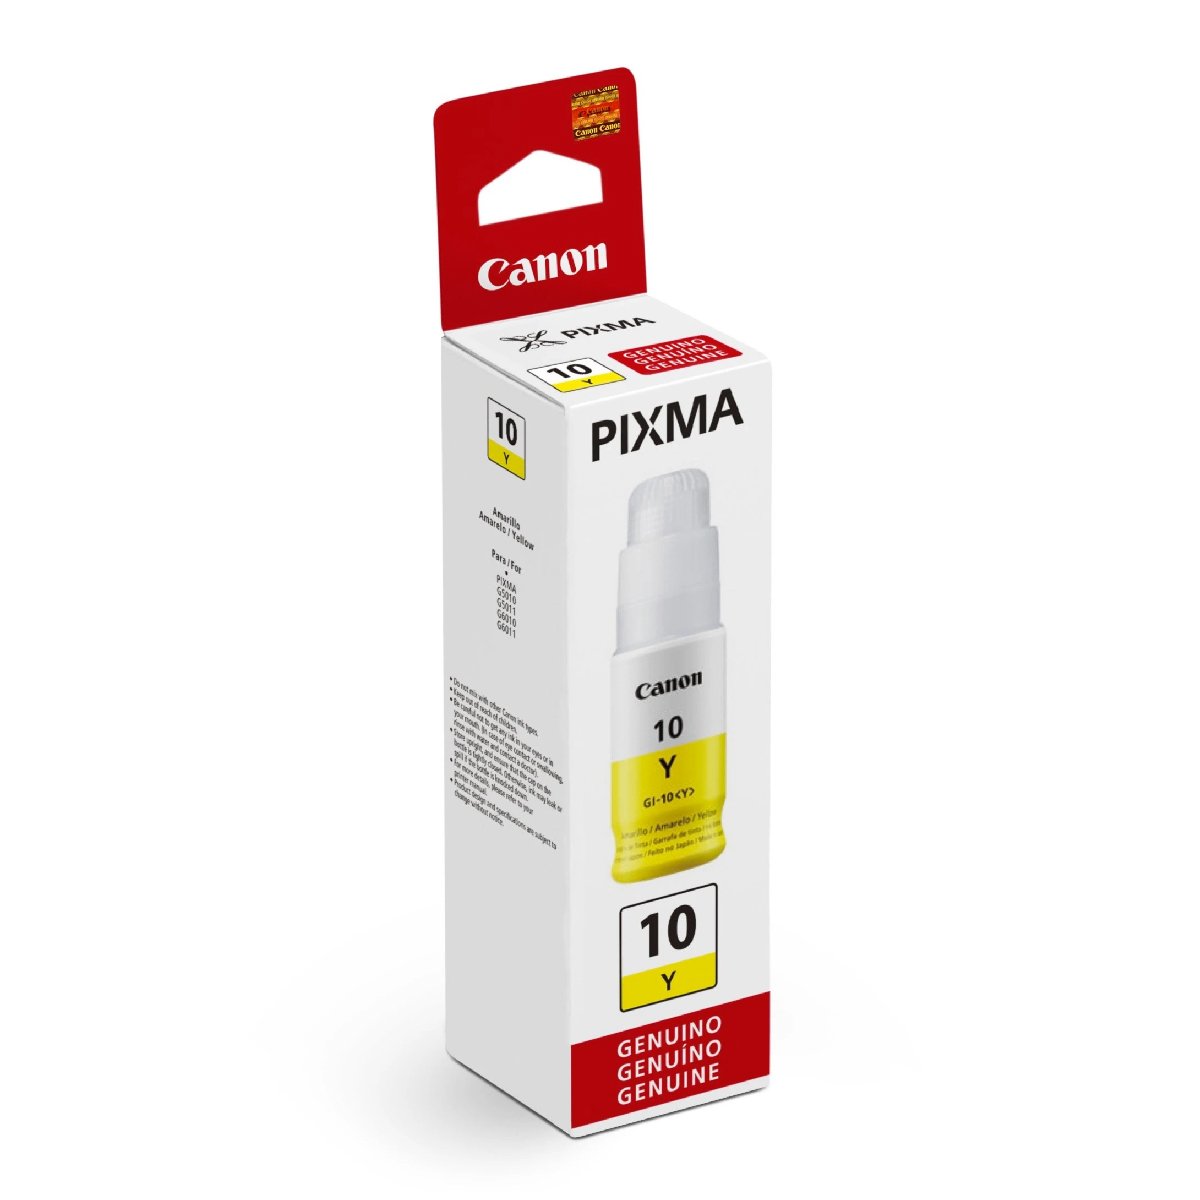 Botella de tinta Canon con 170 ml GI-10 (Amarillo), compatible con PIXMA G5010, G5011, G6010, G6011, GM2010, GM2011.